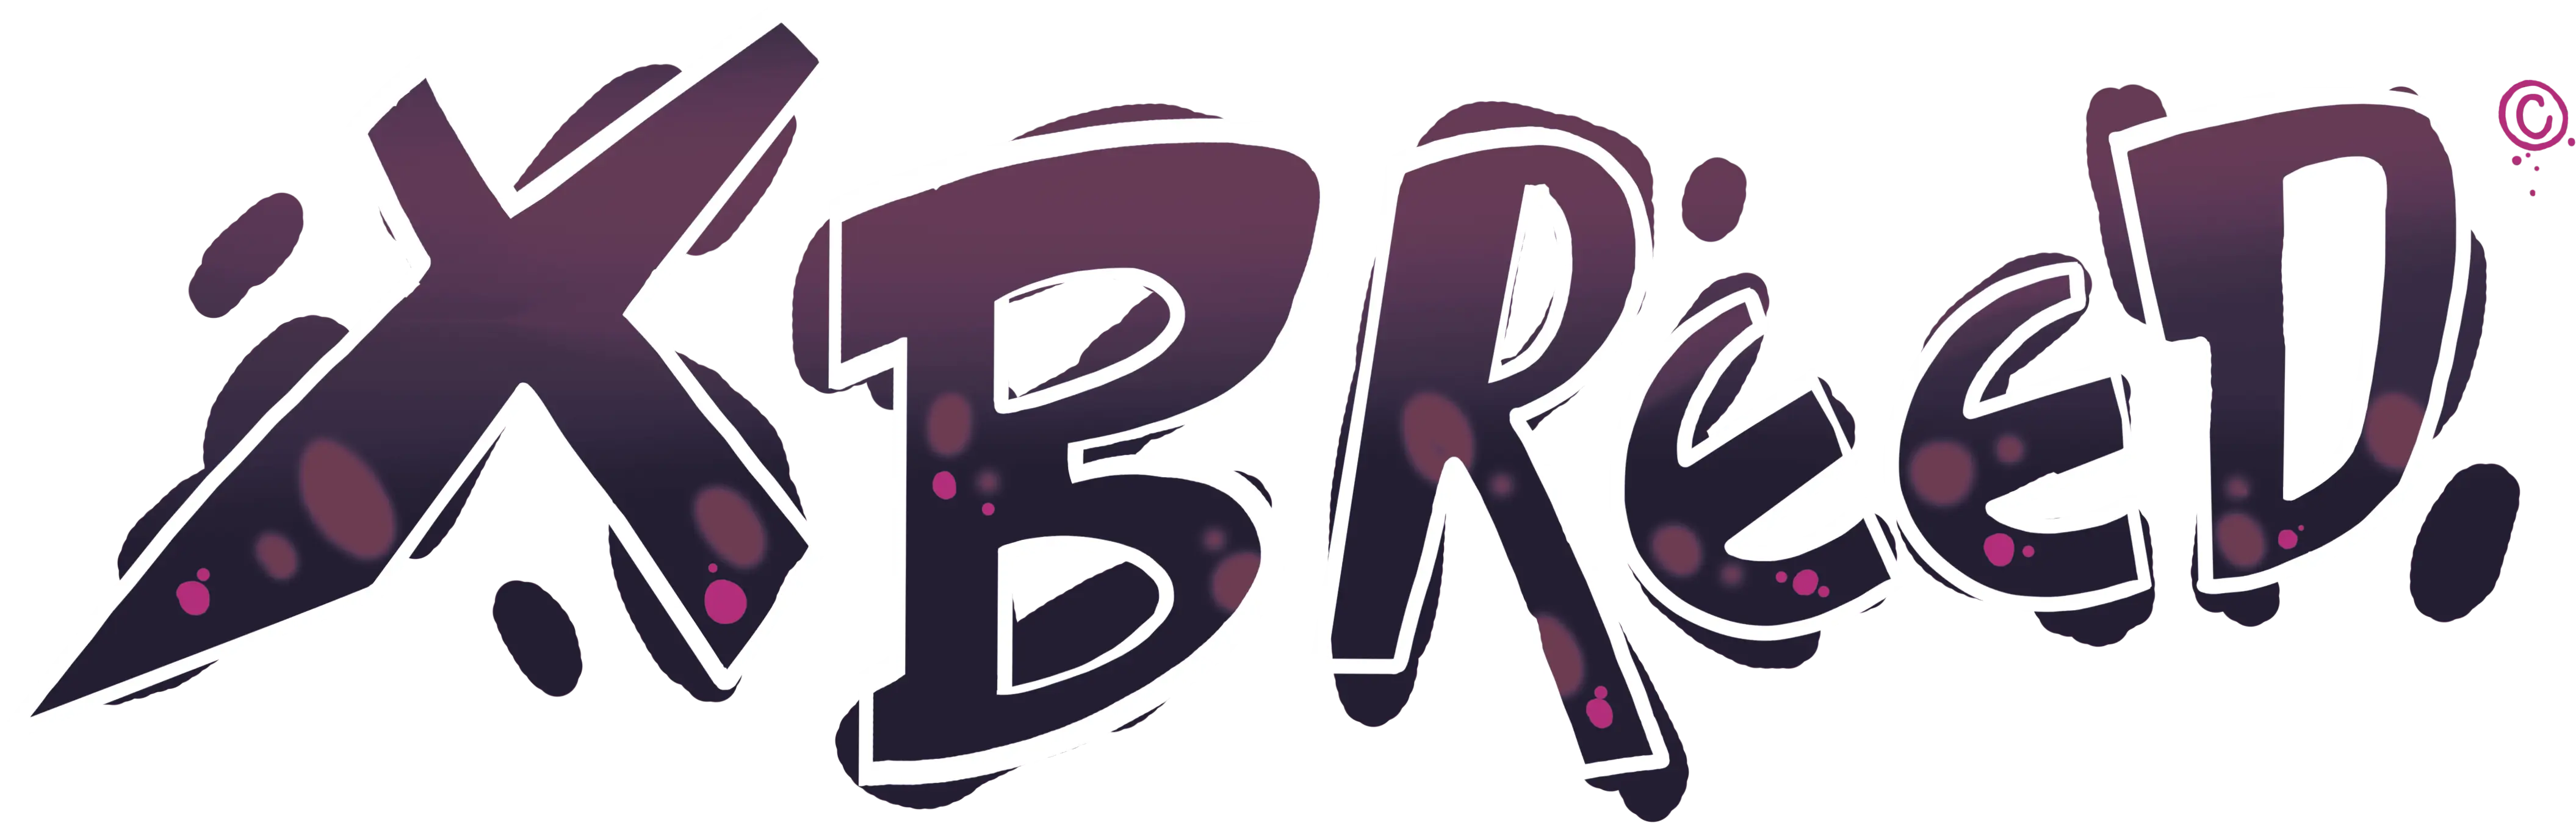 X-Breed logo